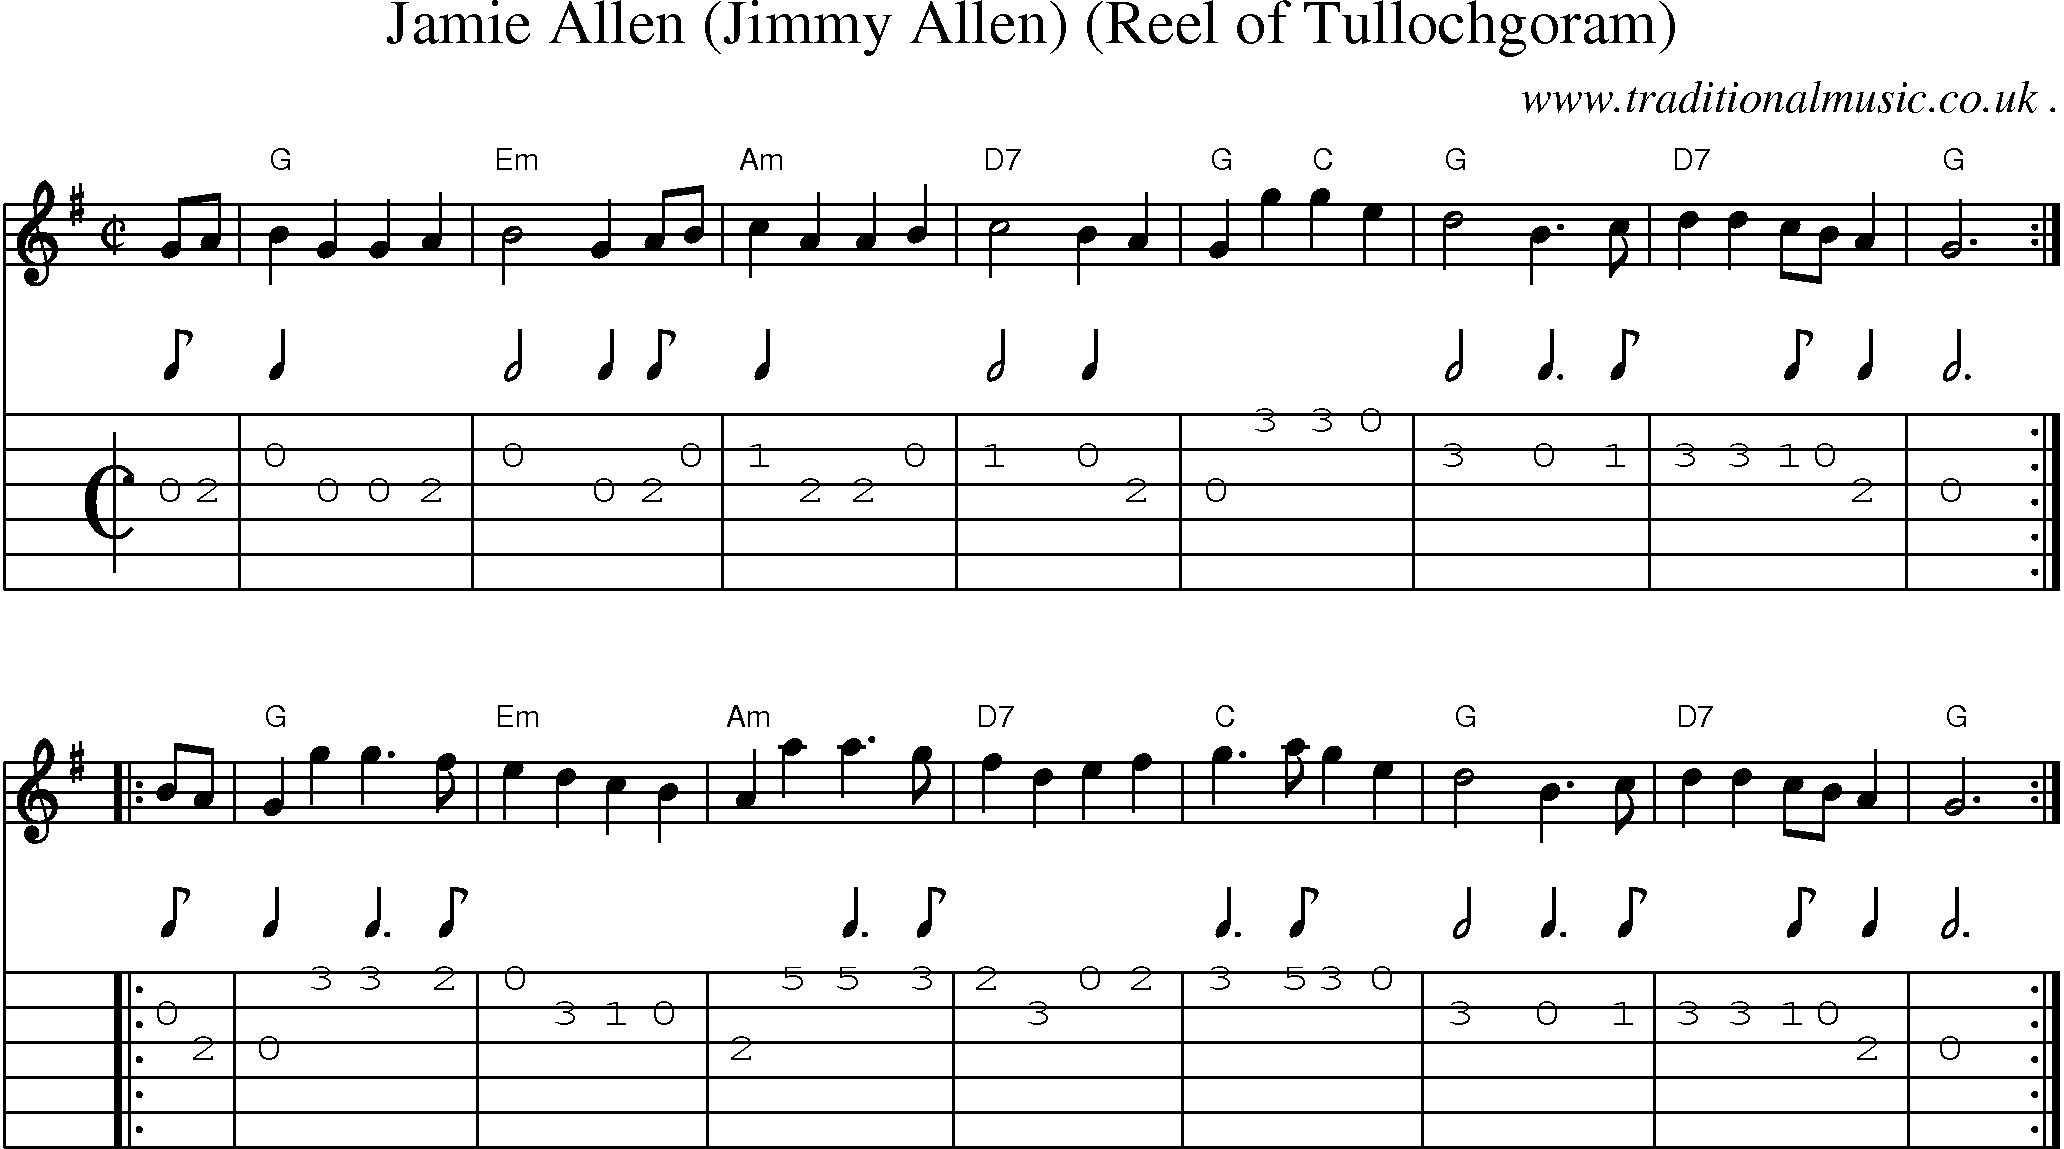 Sheet-music  score, Chords and Guitar Tabs for Jamie Allen Jimmy Allen Reel Of Tullochgoram